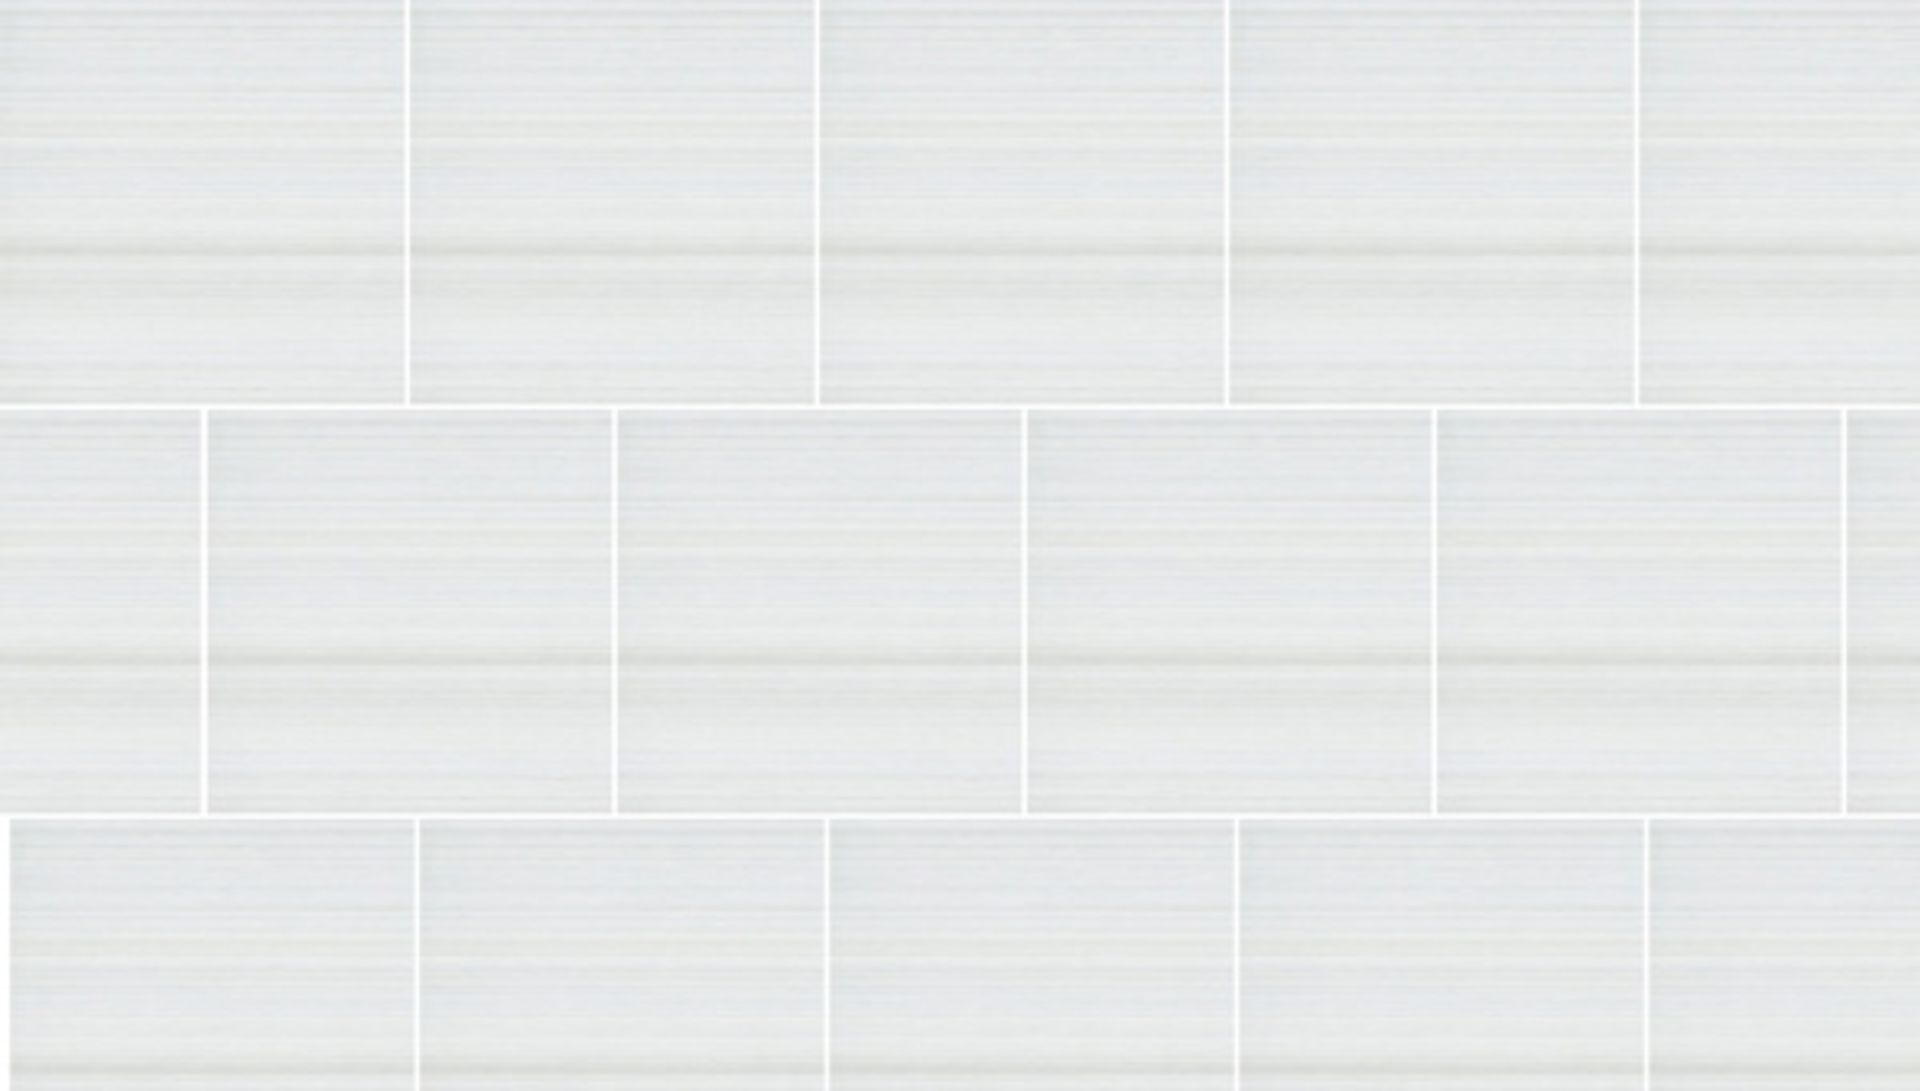 6.78 Square Meters of Porcelanosa Talis Blanco Wall tiles. 20x33.3cm per tile. 1.13m2 per pack. - Image 2 of 3